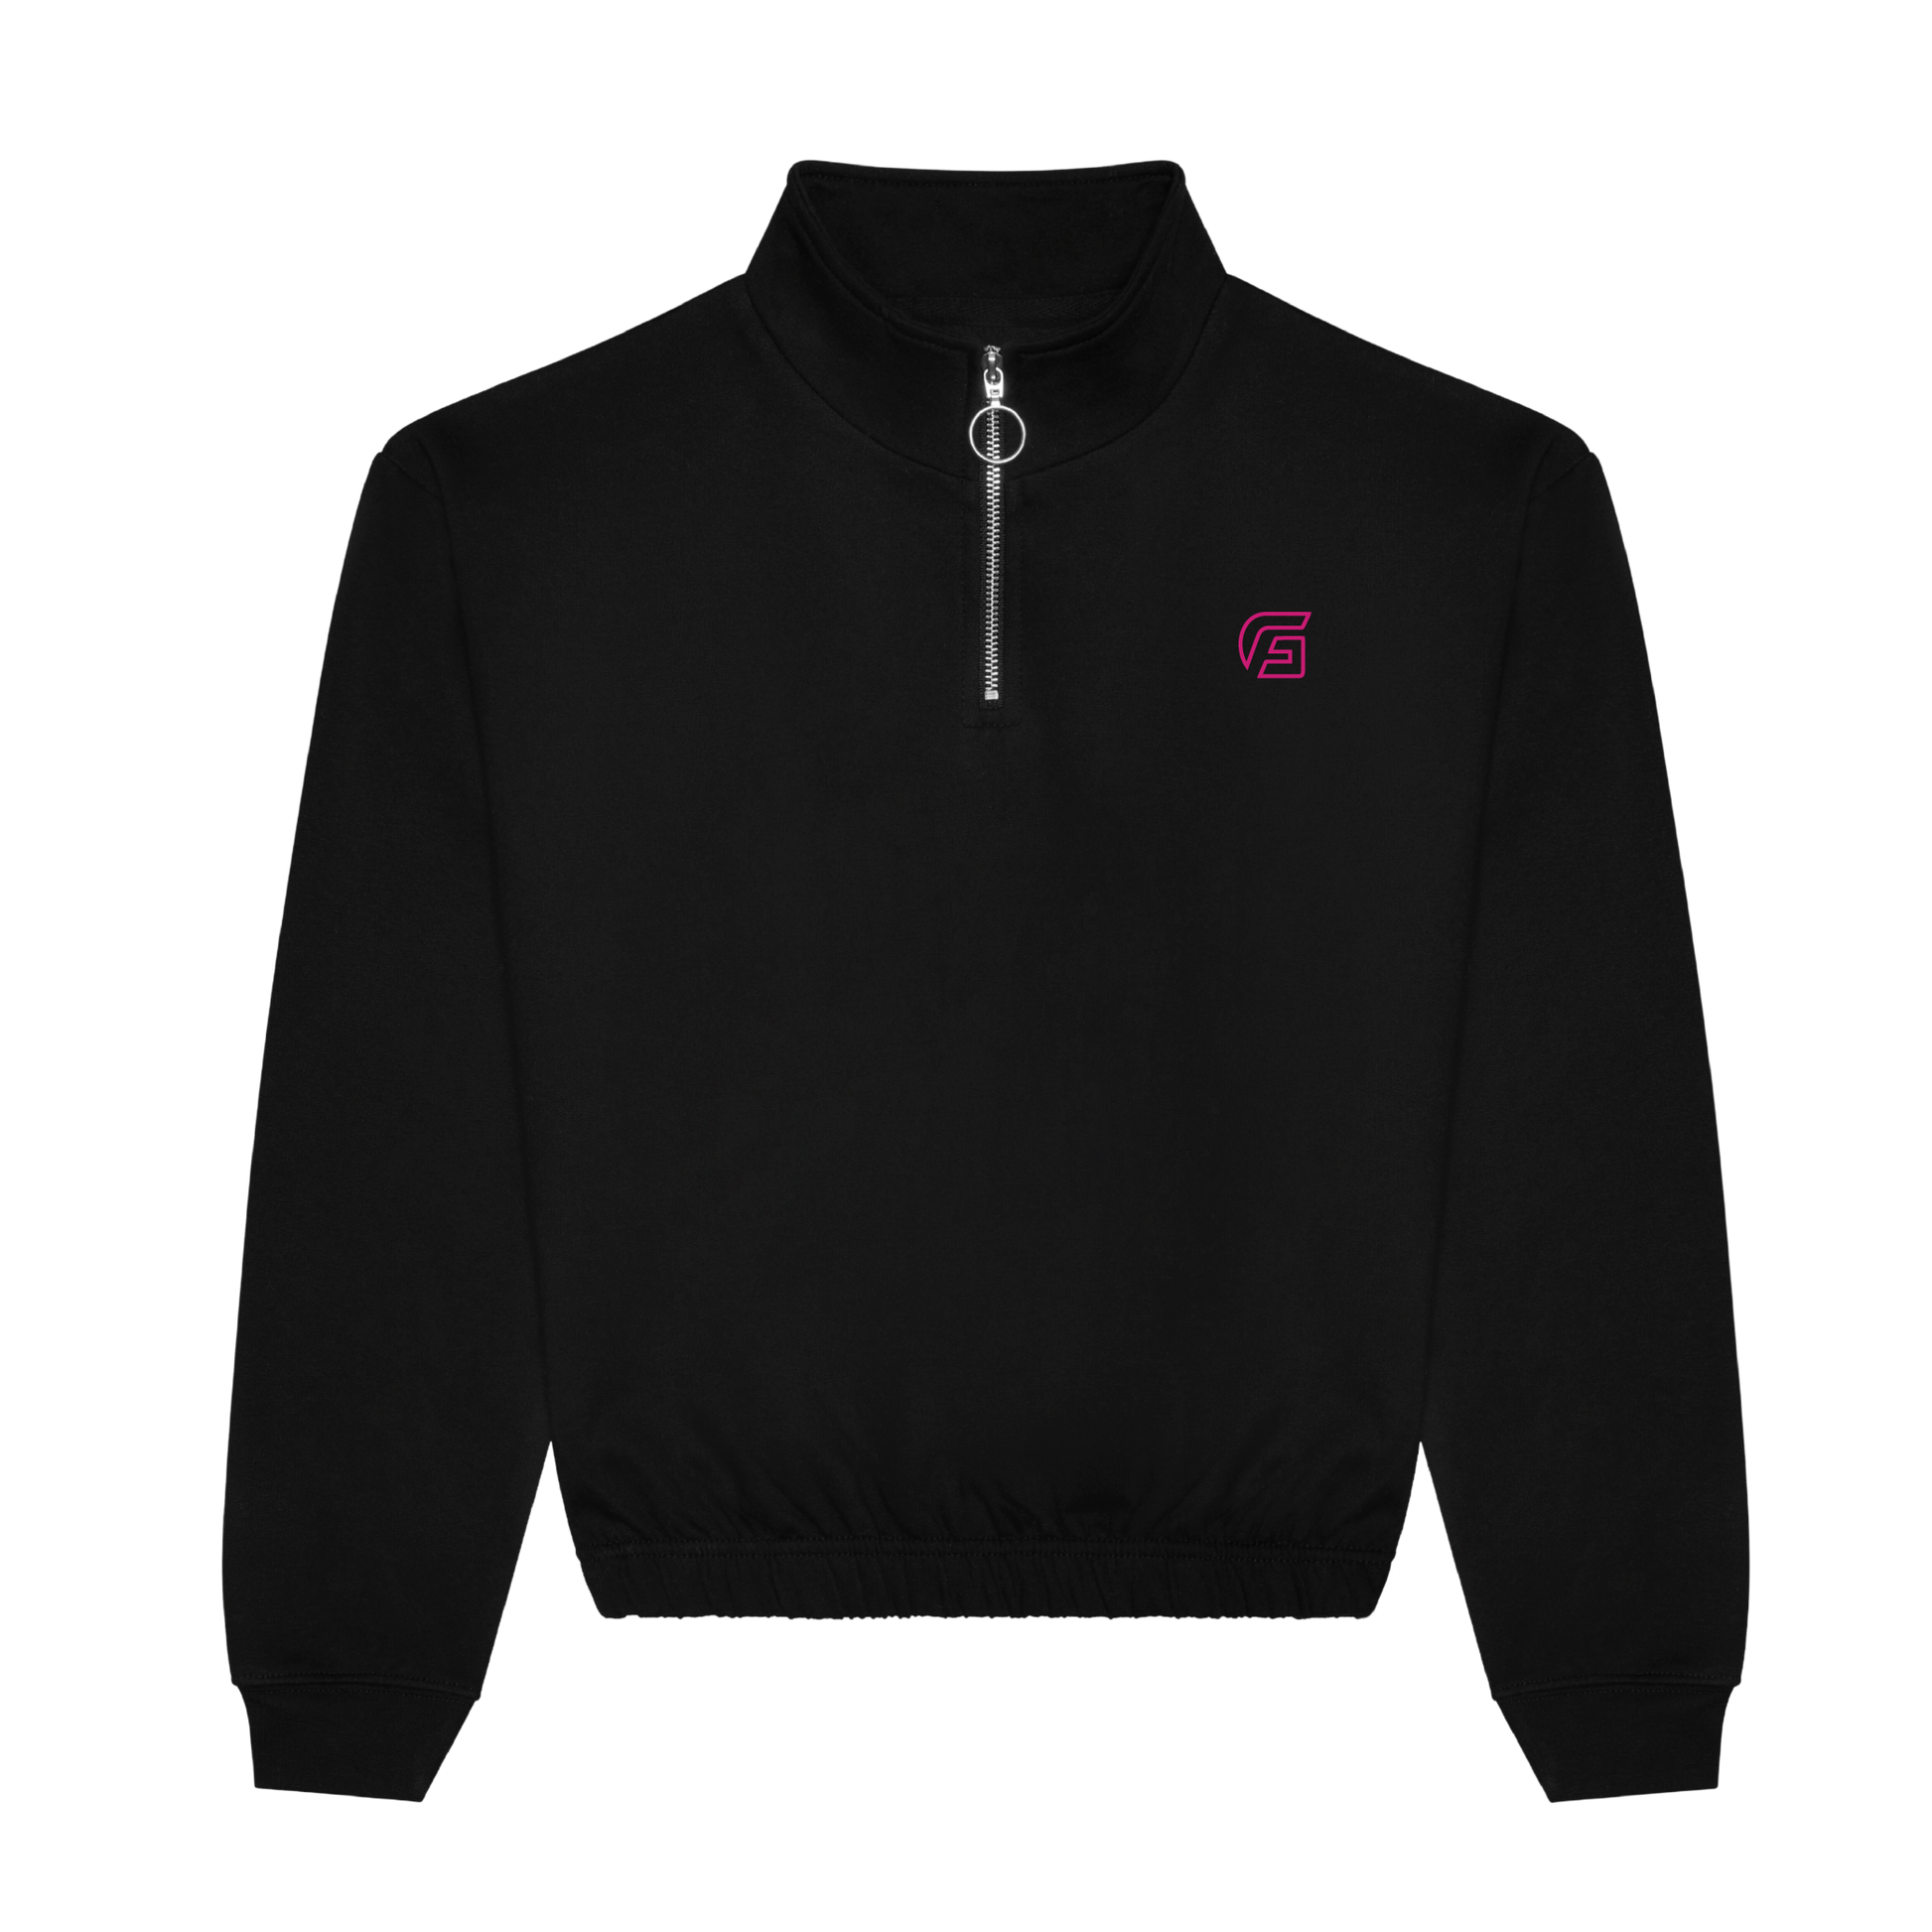 Focusgolf Swing Strong Women's Carbon Black Qtr Zip Sweatshirt